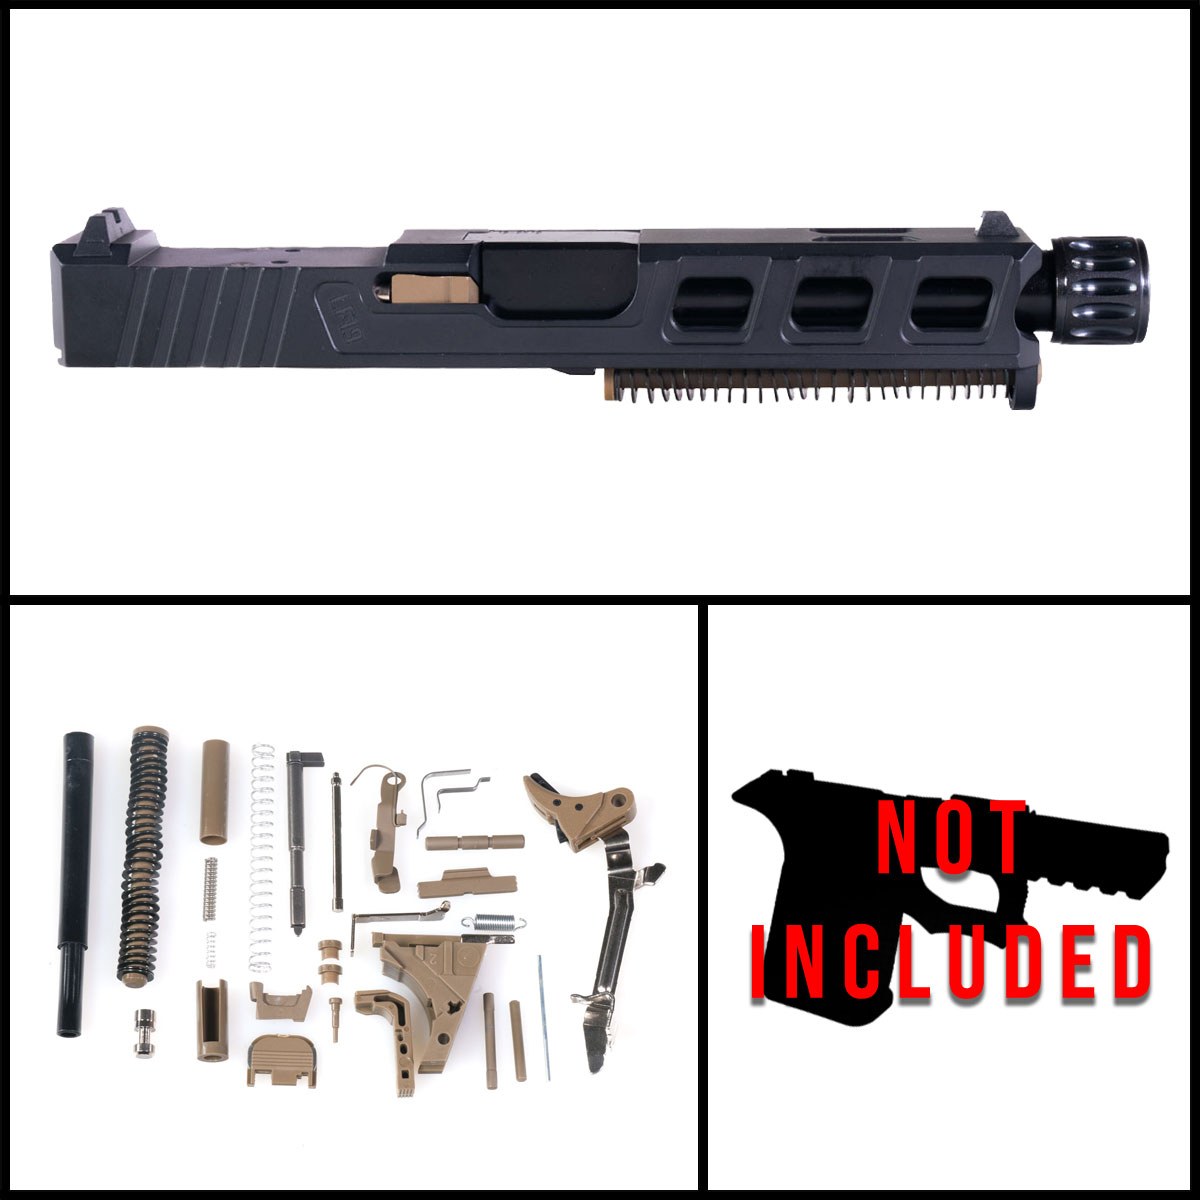 MMC 'Mud Flap' 9mm Full Pistol Build Kit (Everything Minus Frame) - Glock 19 Gen 1-3 Compatible